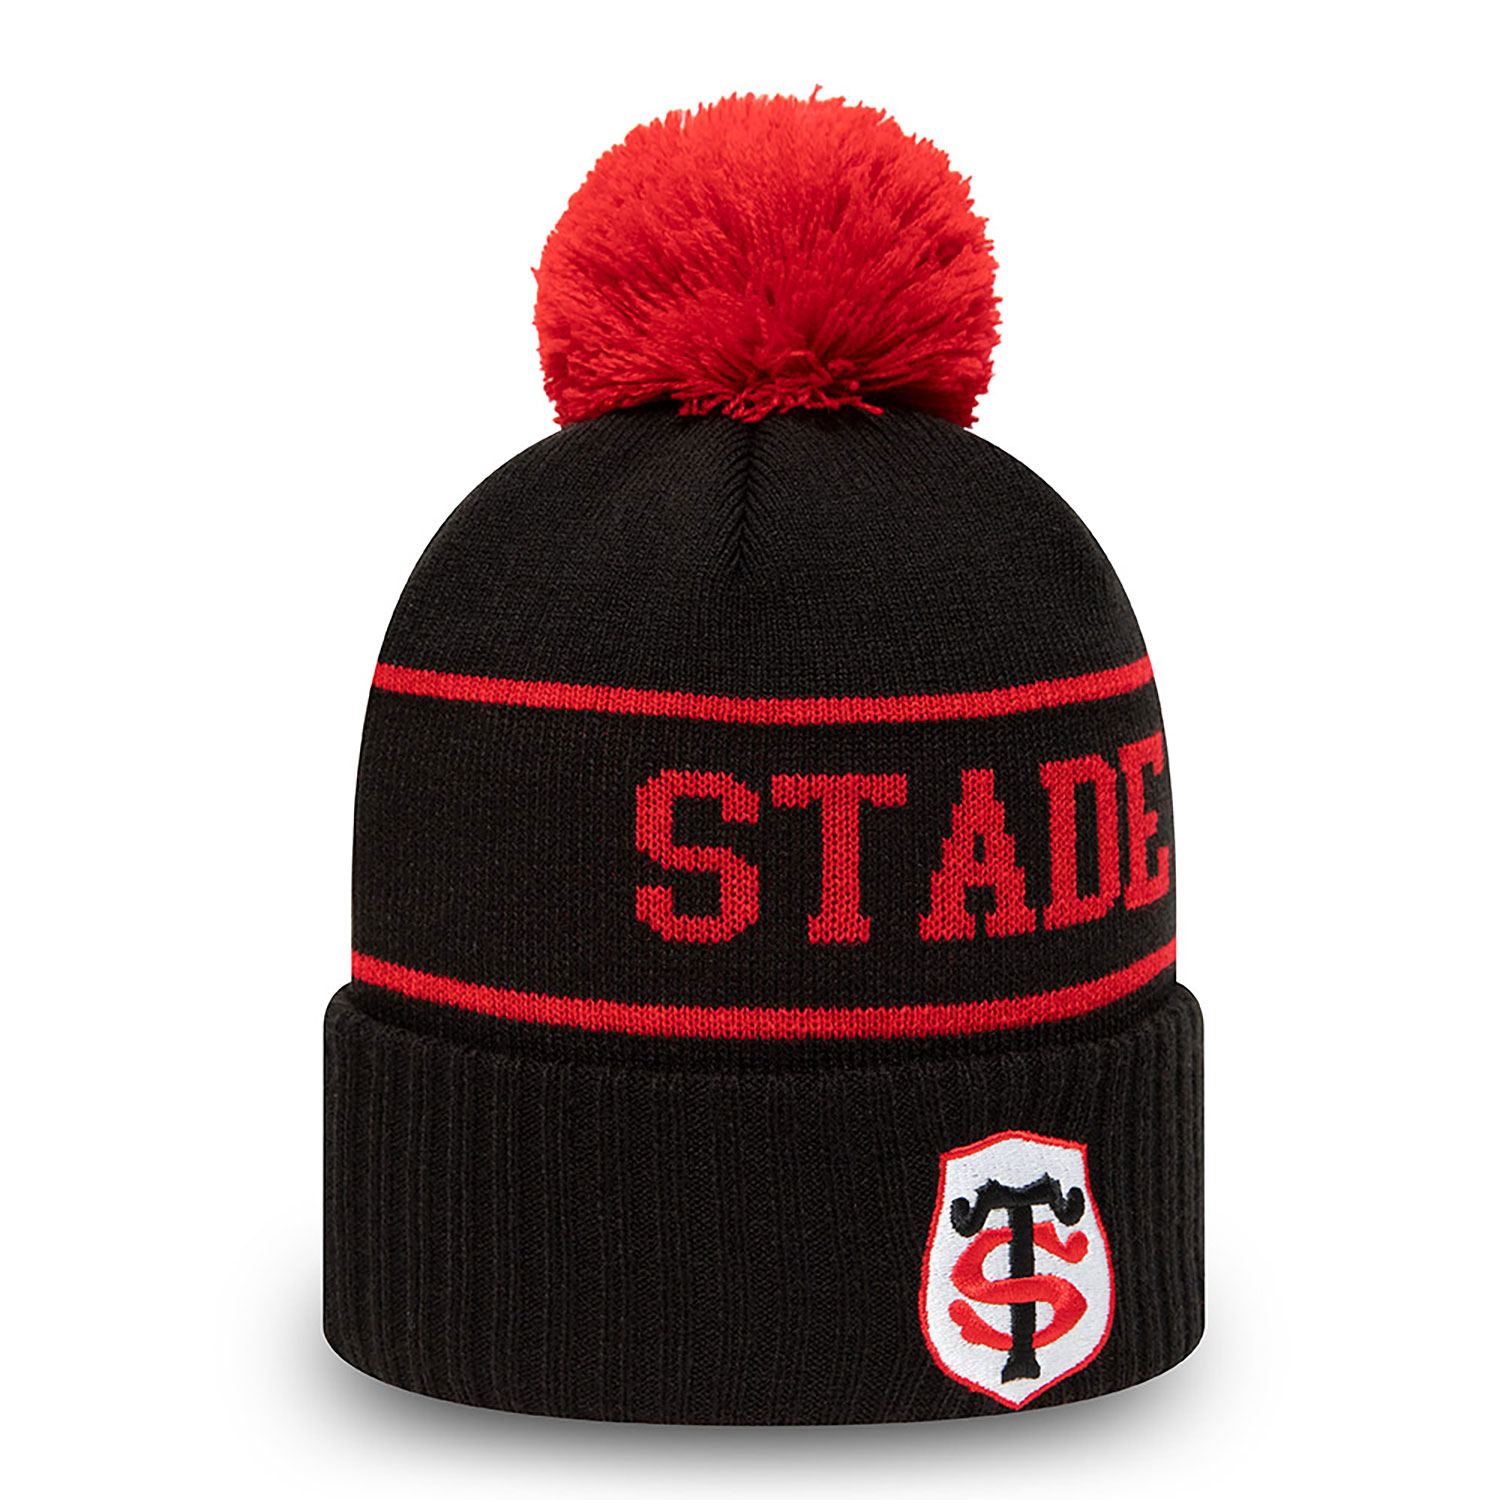 Stade Toulousain Black Bobble Knit Beanie Hat